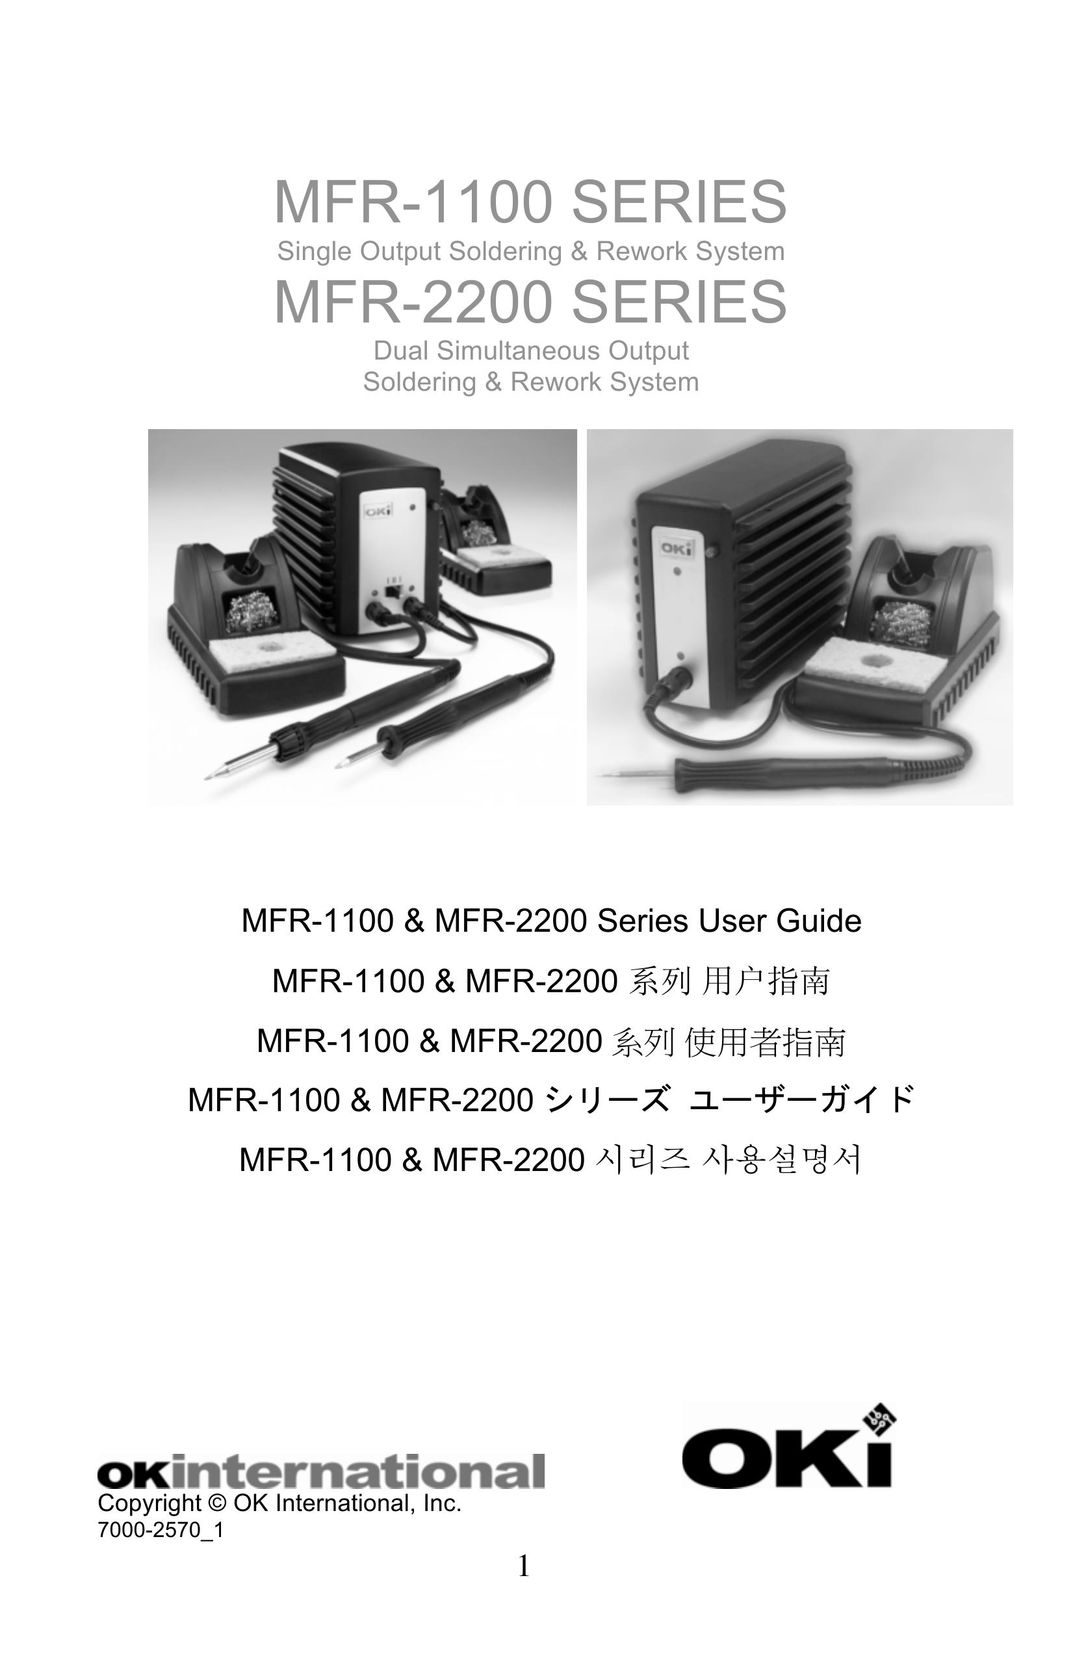 Oki MFR-2200 Soldering Gun User Manual